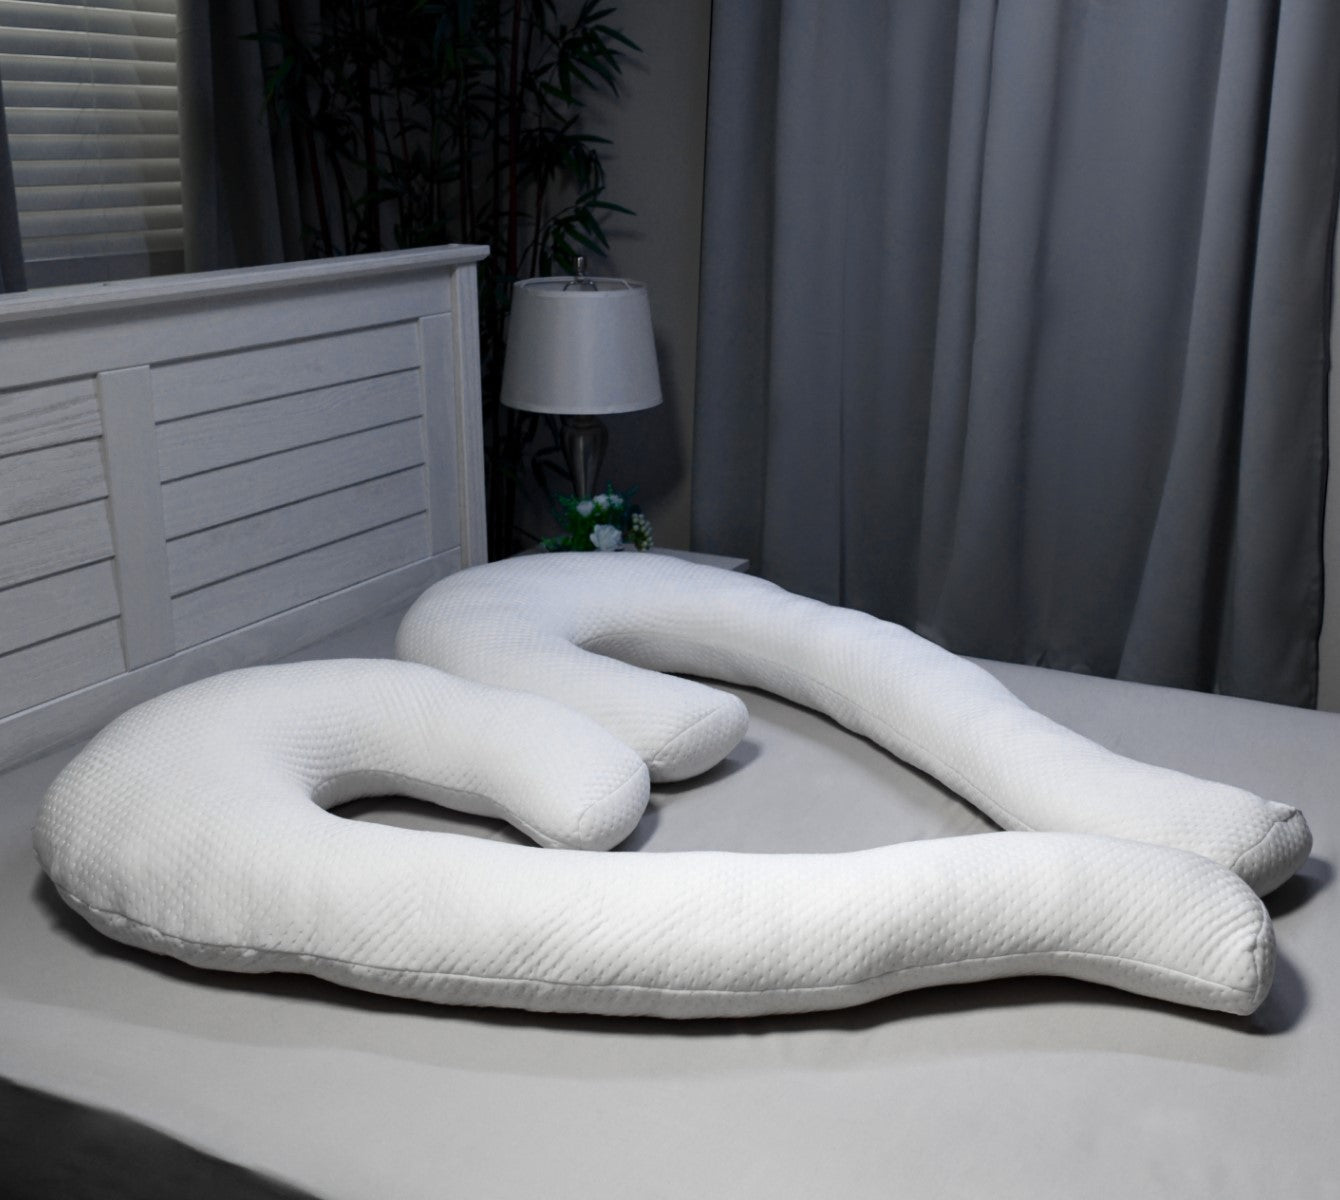  Contour Swan Body Pillow w/Pillowcase & Mesh Laundry Bag, Cool  XL - As Seen on TV : Home & Kitchen